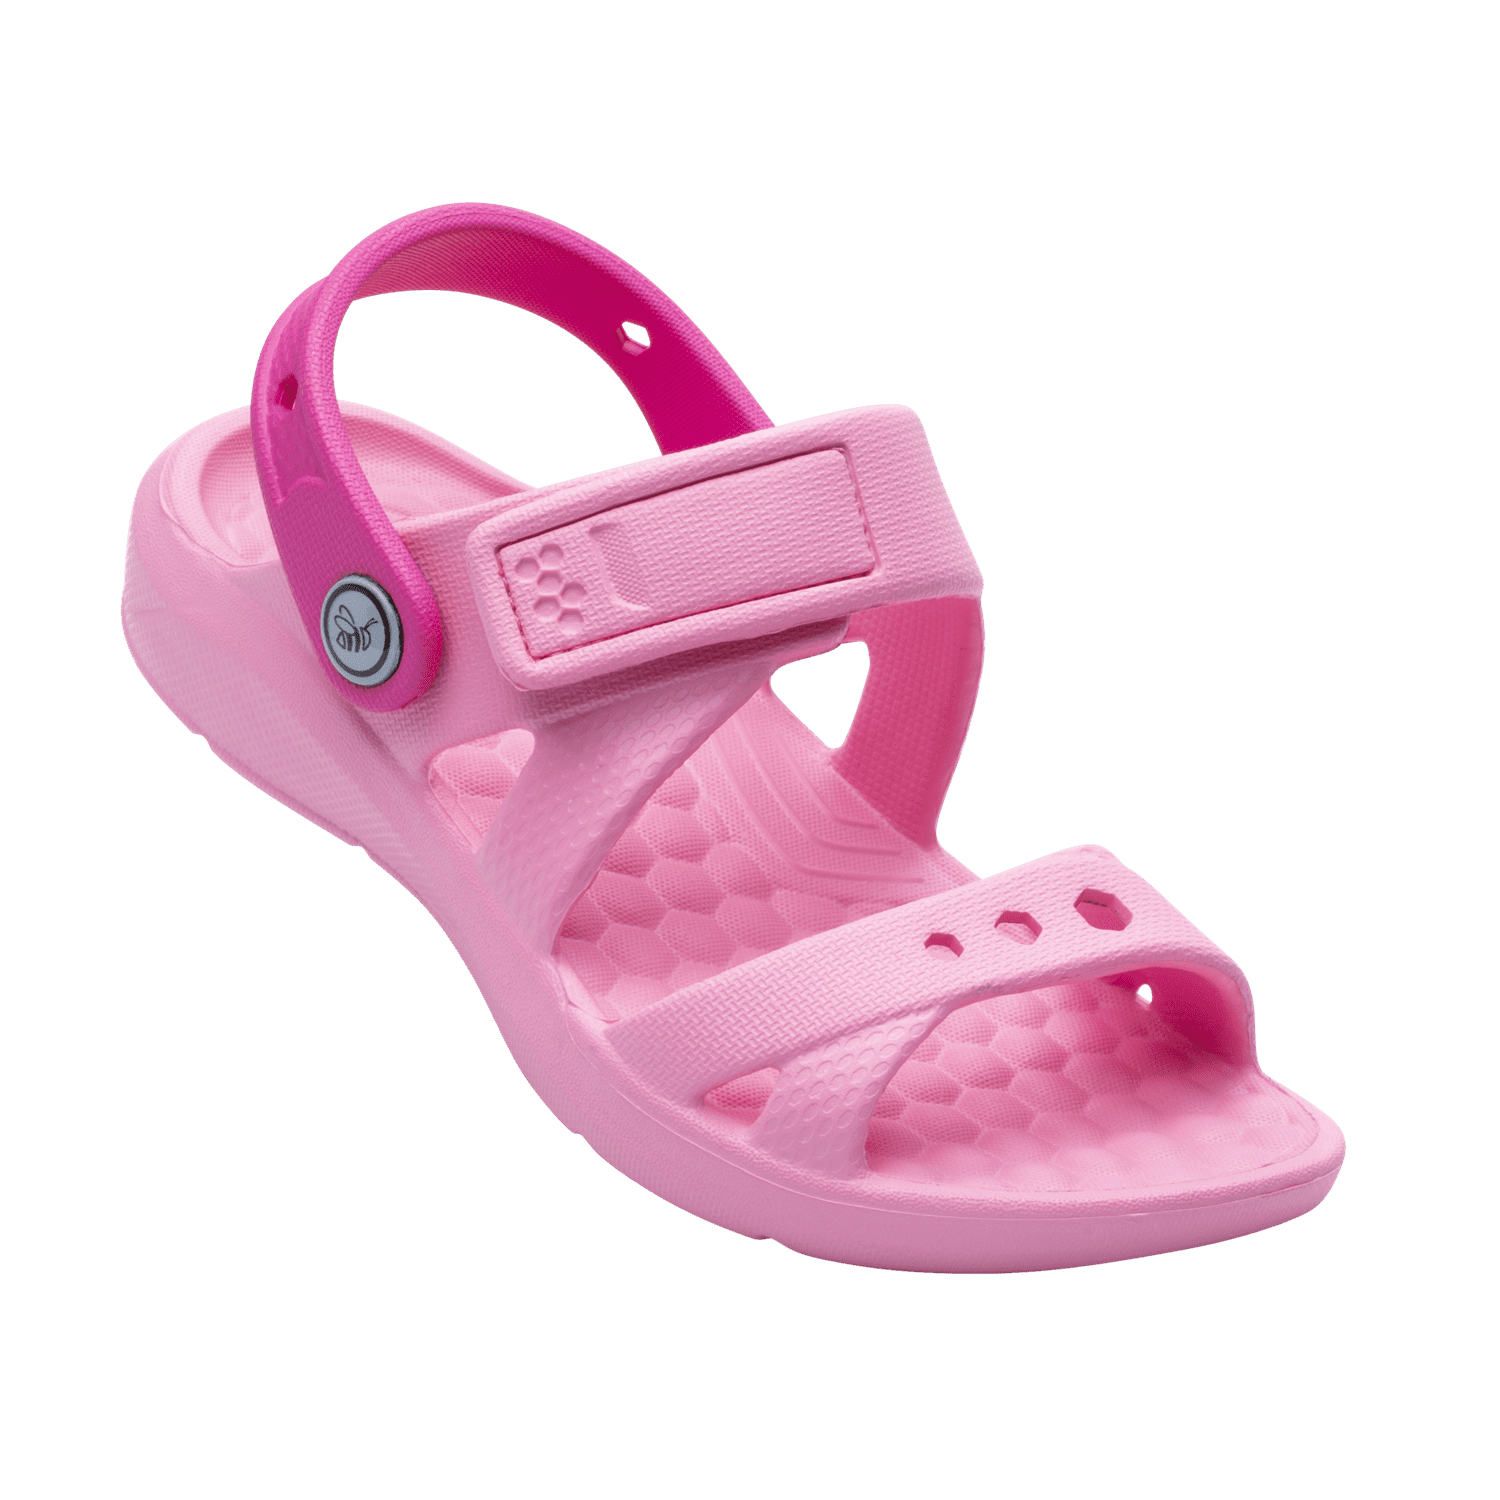 Joybees - Joybees Kids' Adventure Sandal | Easy to clean, comfortable ...